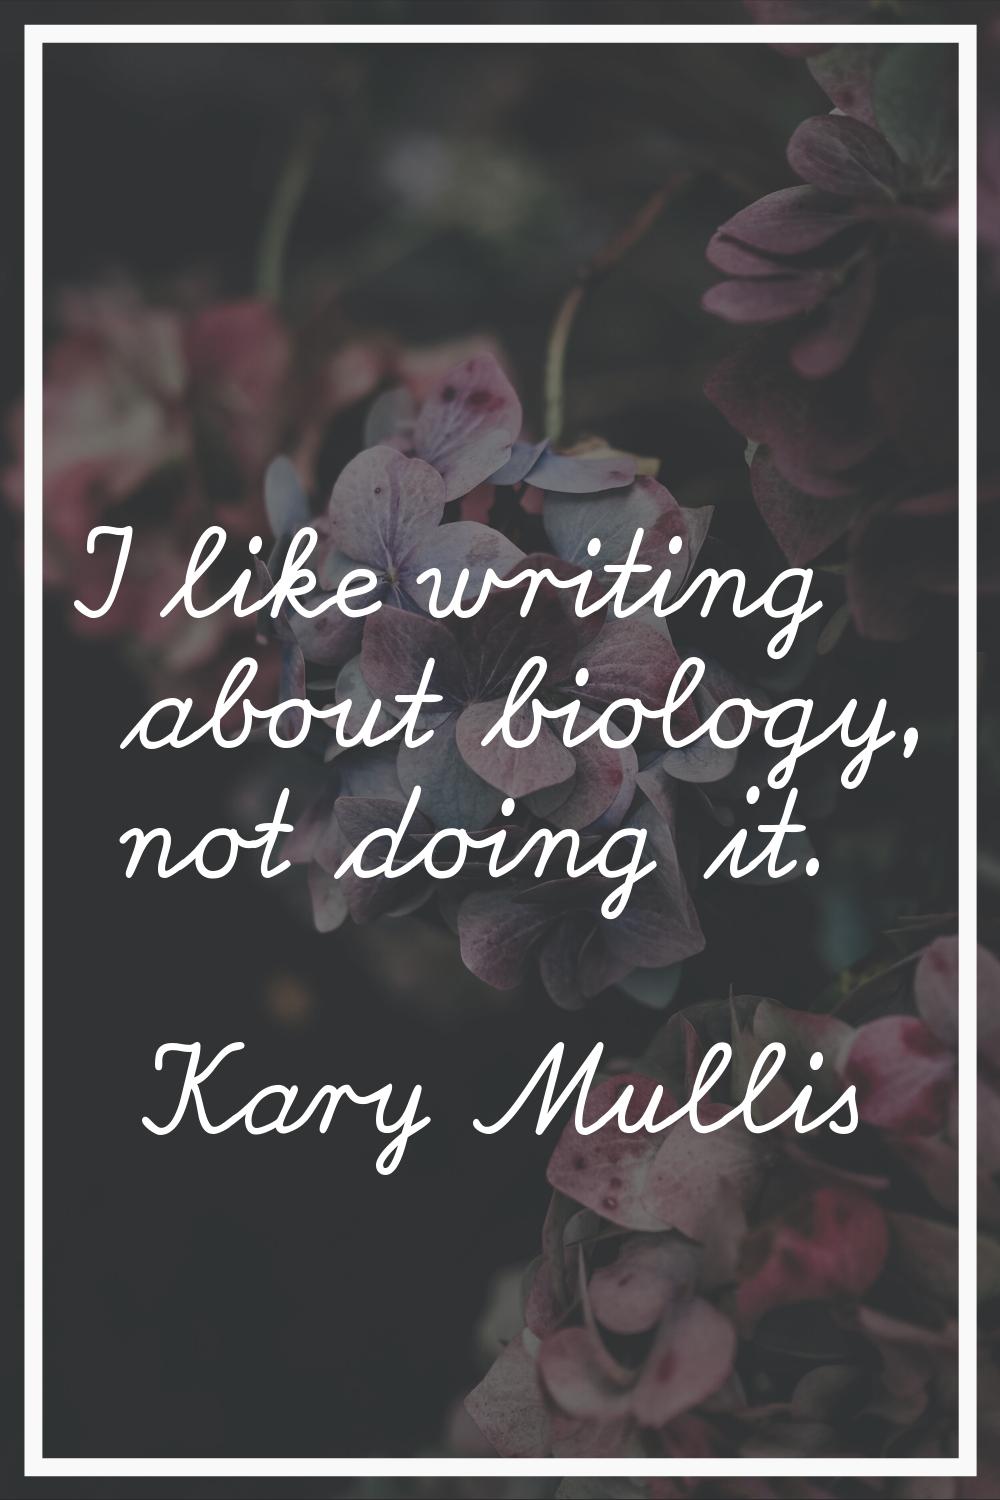 I like writing about biology, not doing it.